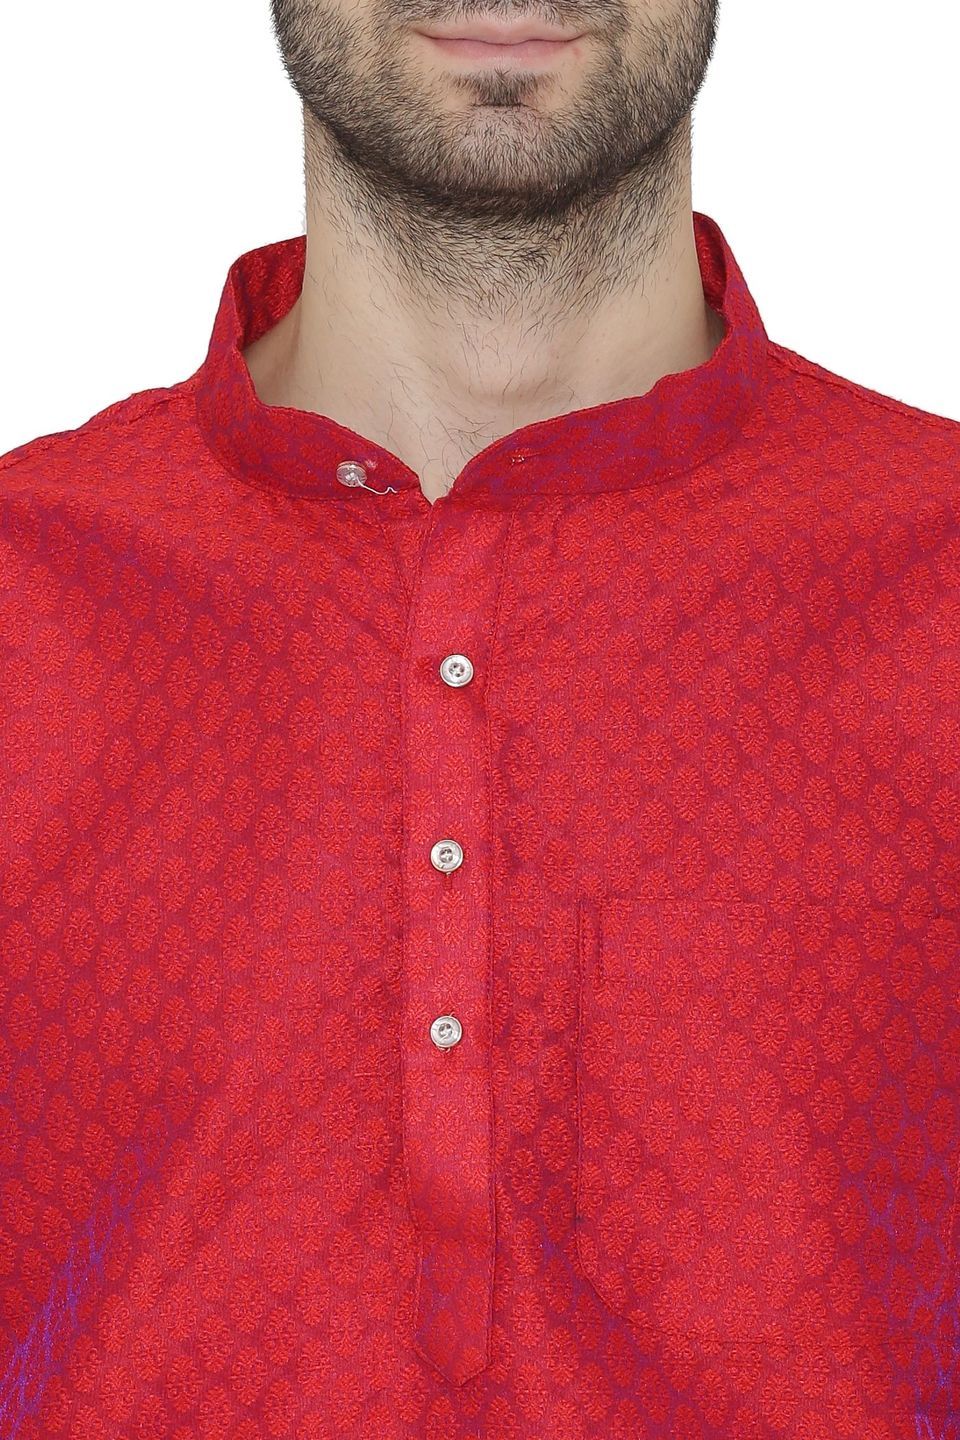 Banarasi Art Silk Red Kurta Pajama